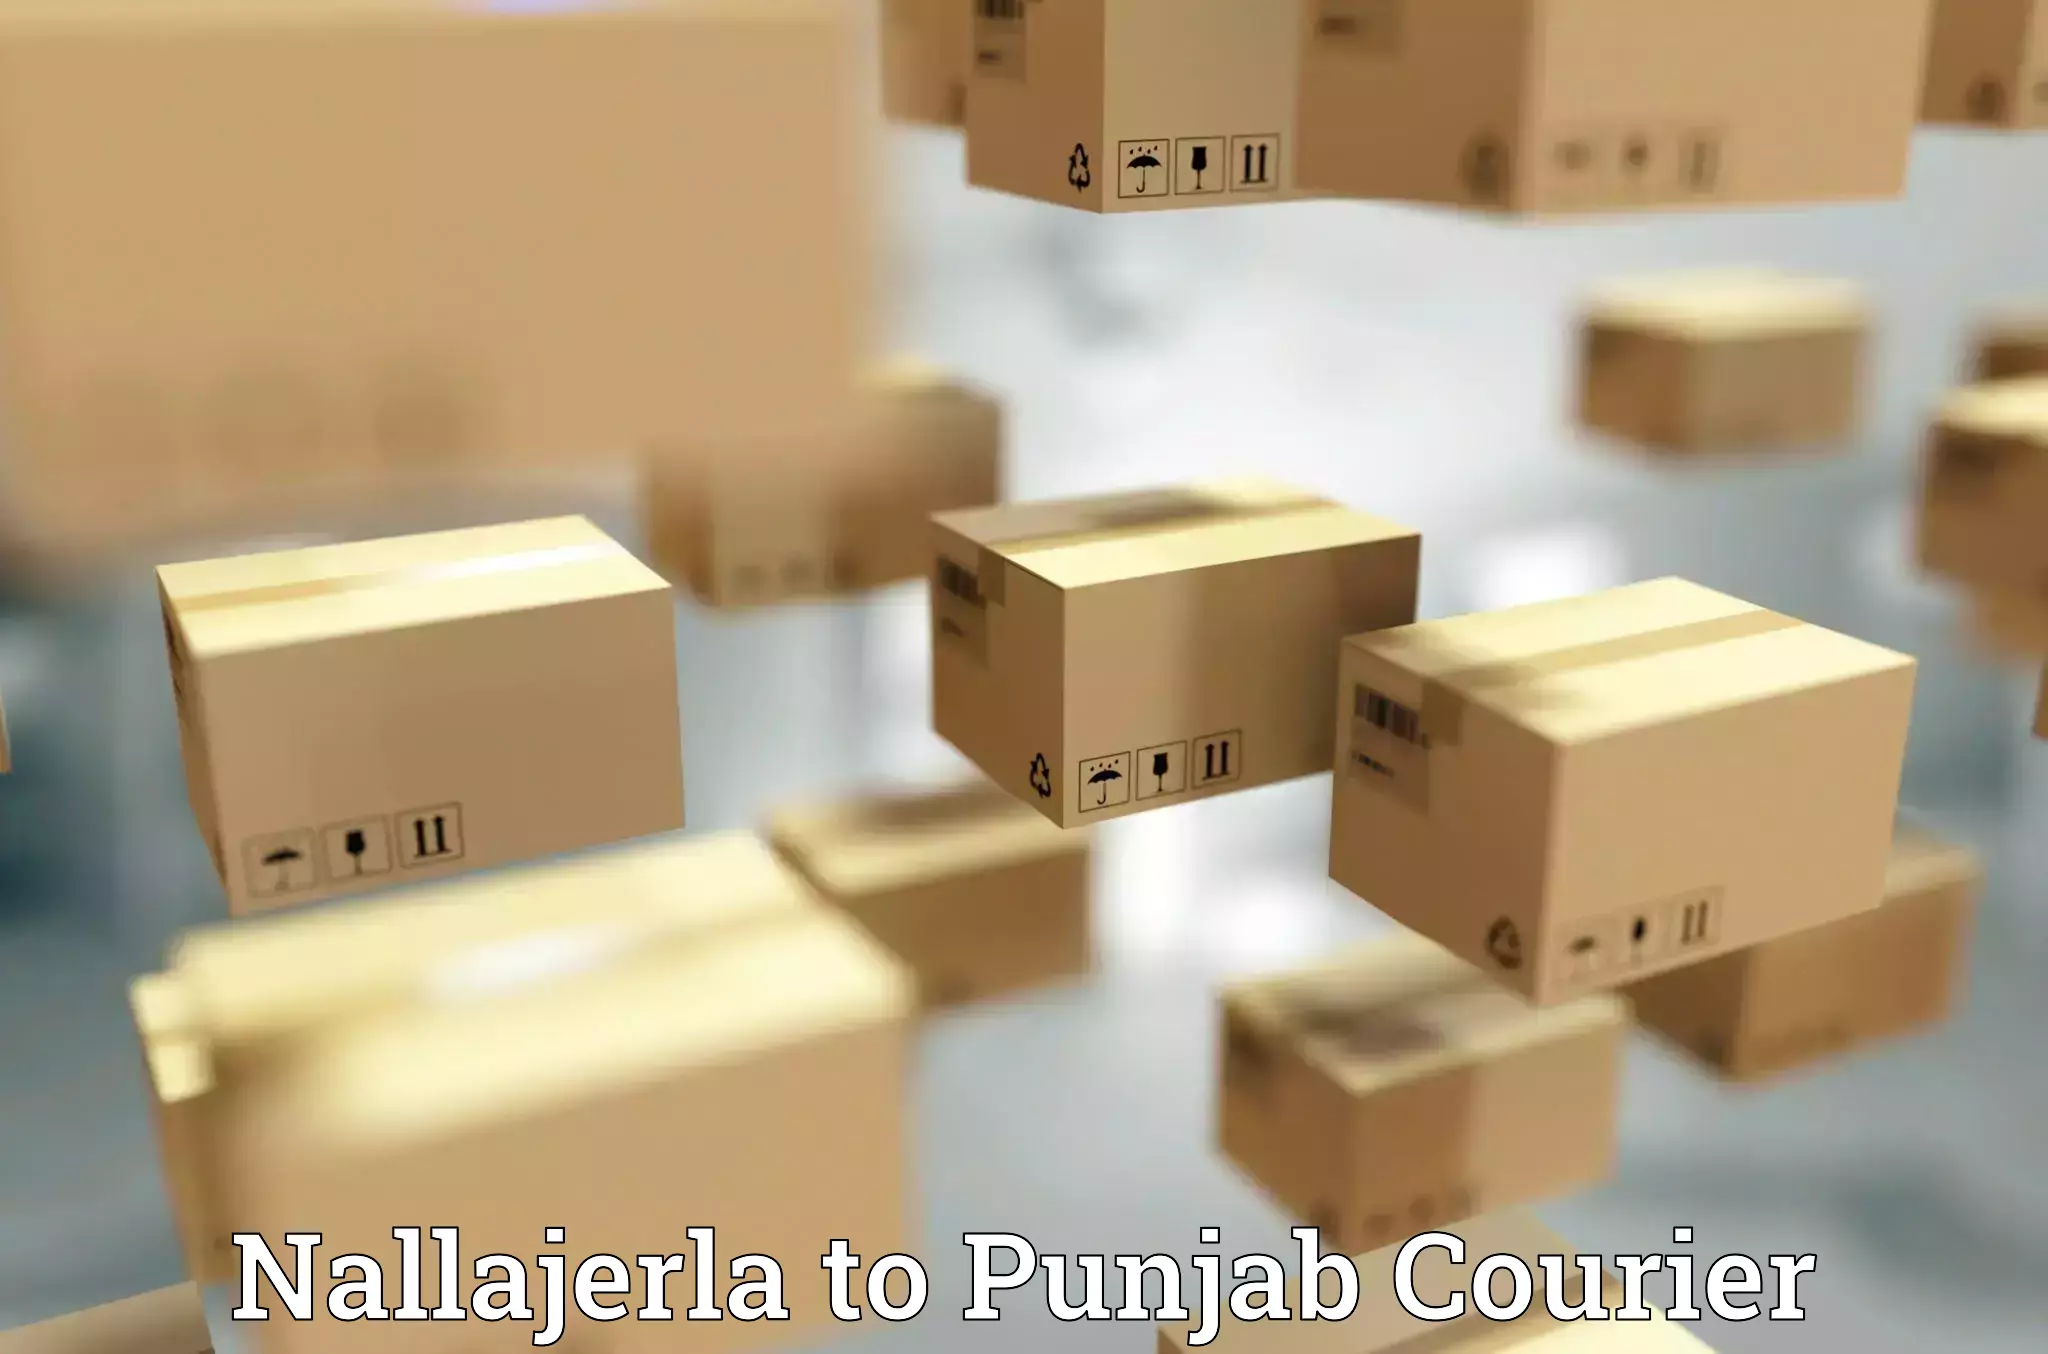 Courier service partnerships Nallajerla to Ajnala